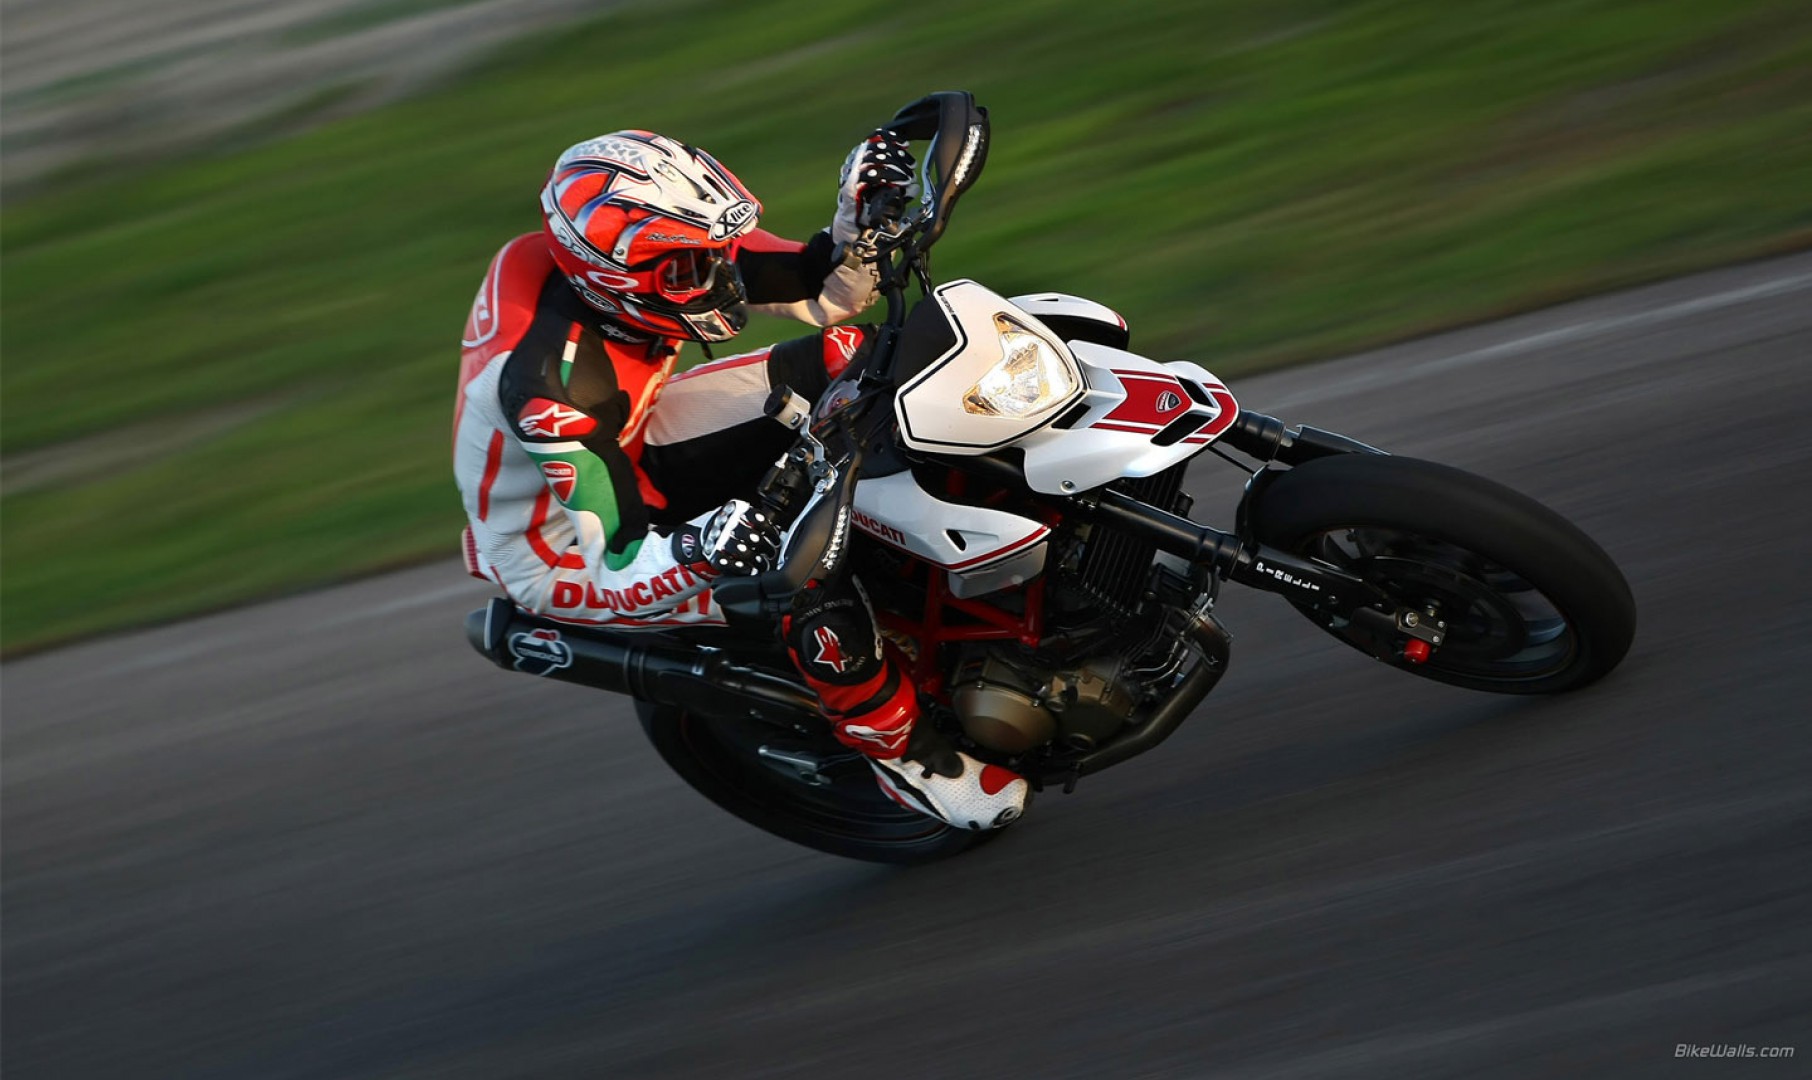 Ducati_Hypermotard_1100evo_2010_09_1440x900.jpg